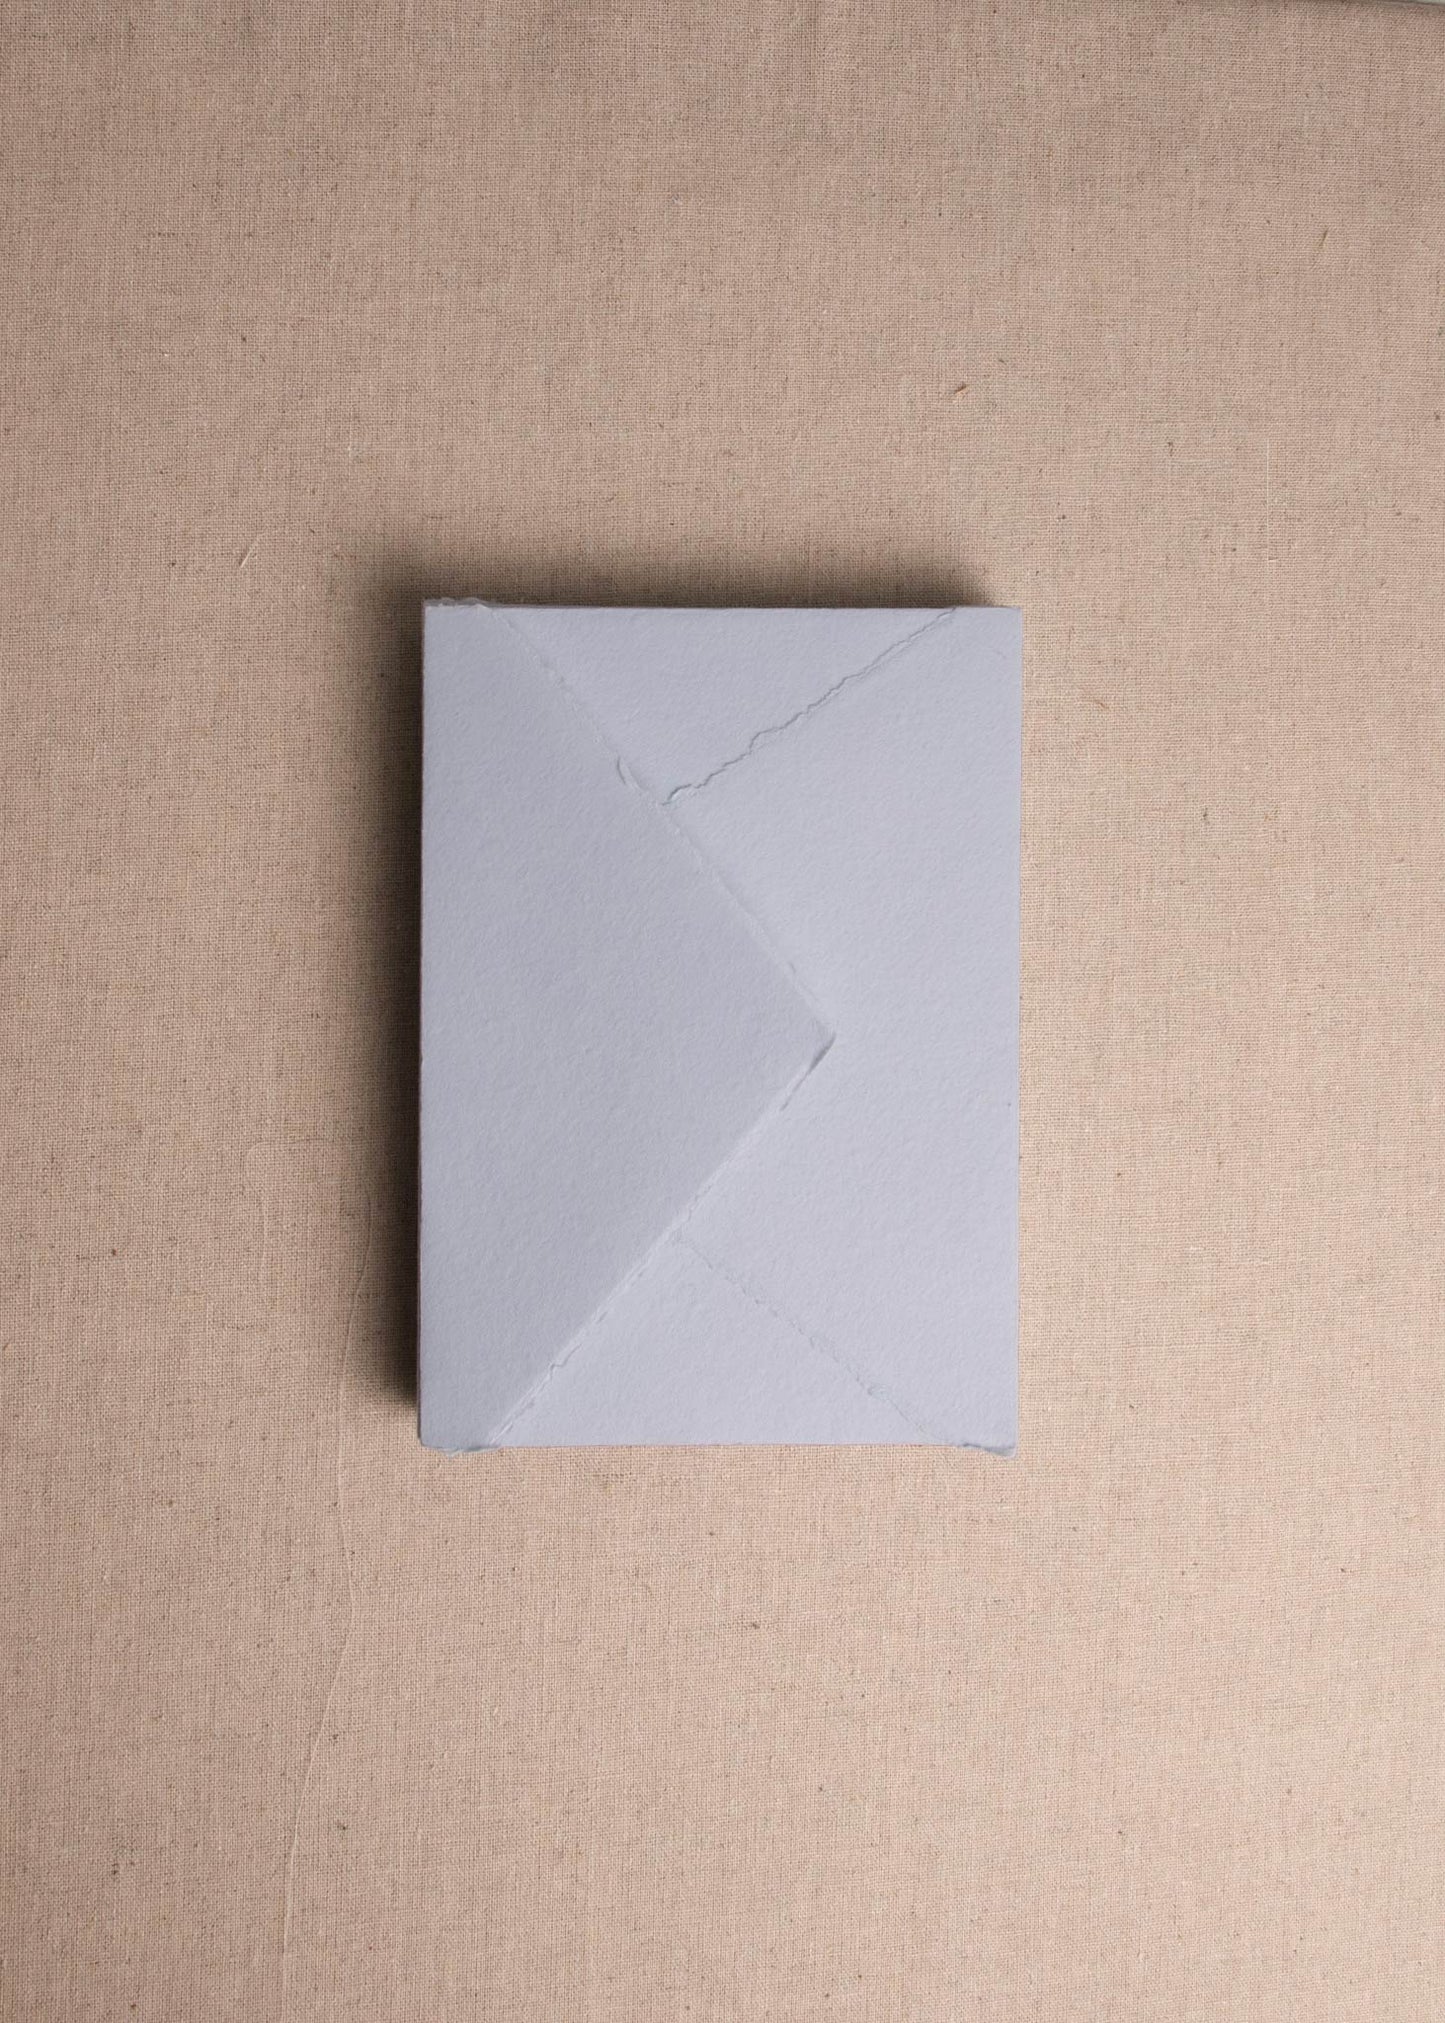 Singular 5x7 Light Blue Handmade paper envelope with deckle edge on linen background